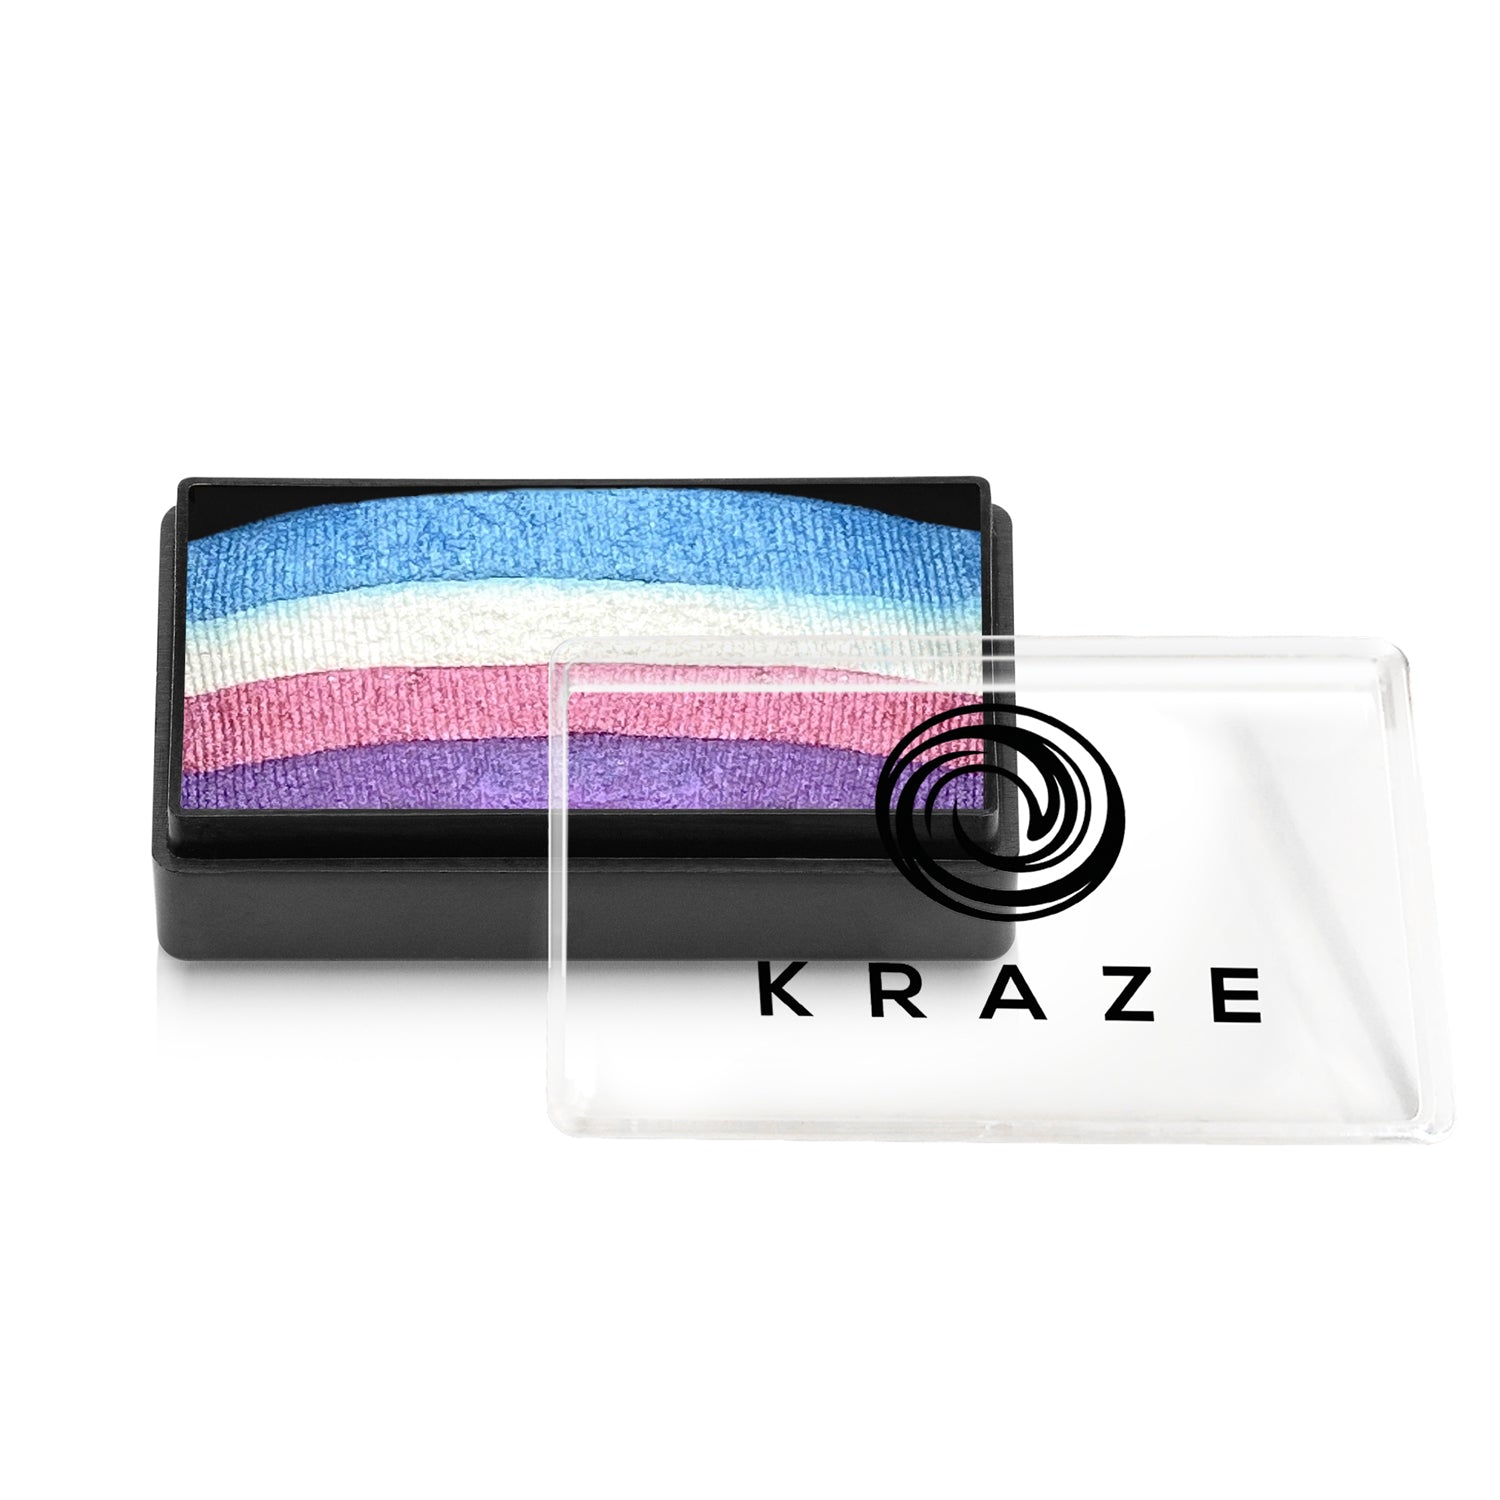 Kraze FX Domed 1-Stroke Pearl Split Cake - 25 gm - Unicorn Shimmer